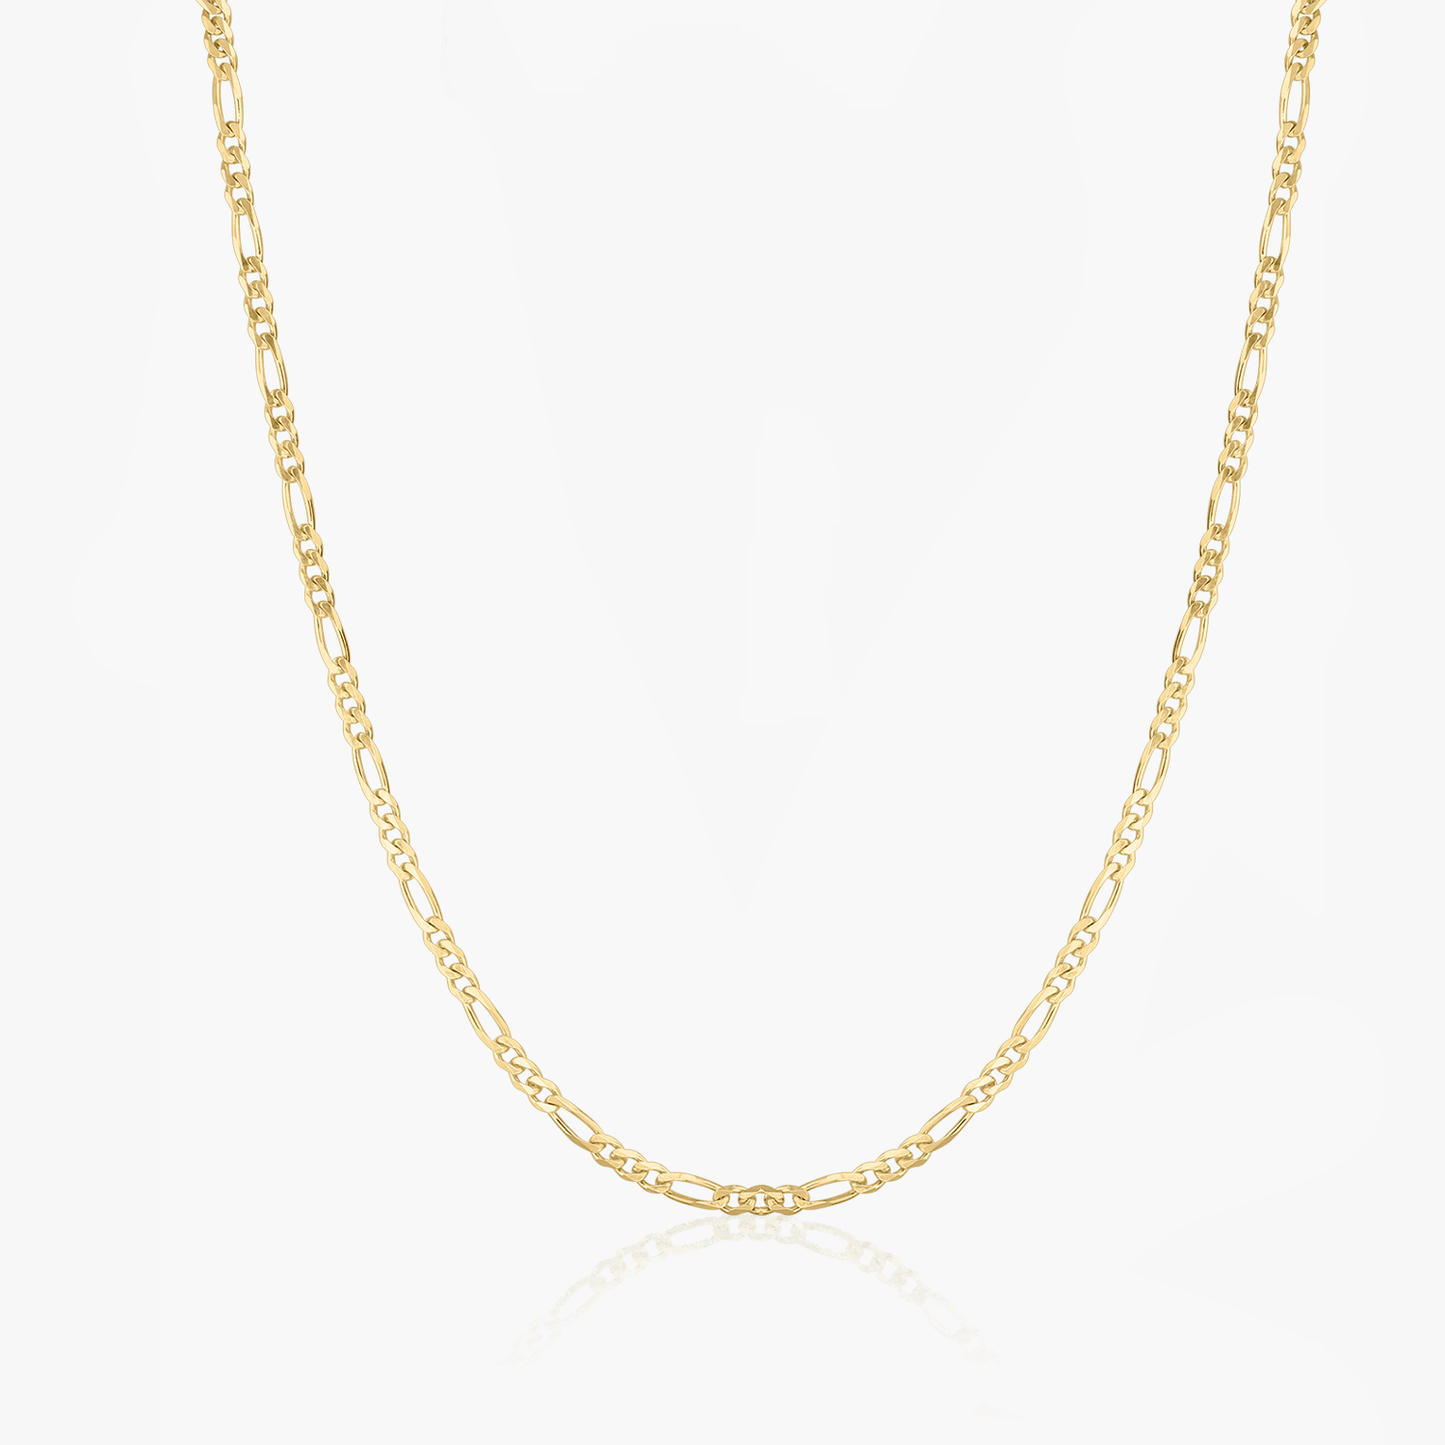 Golden Figaro silver chain